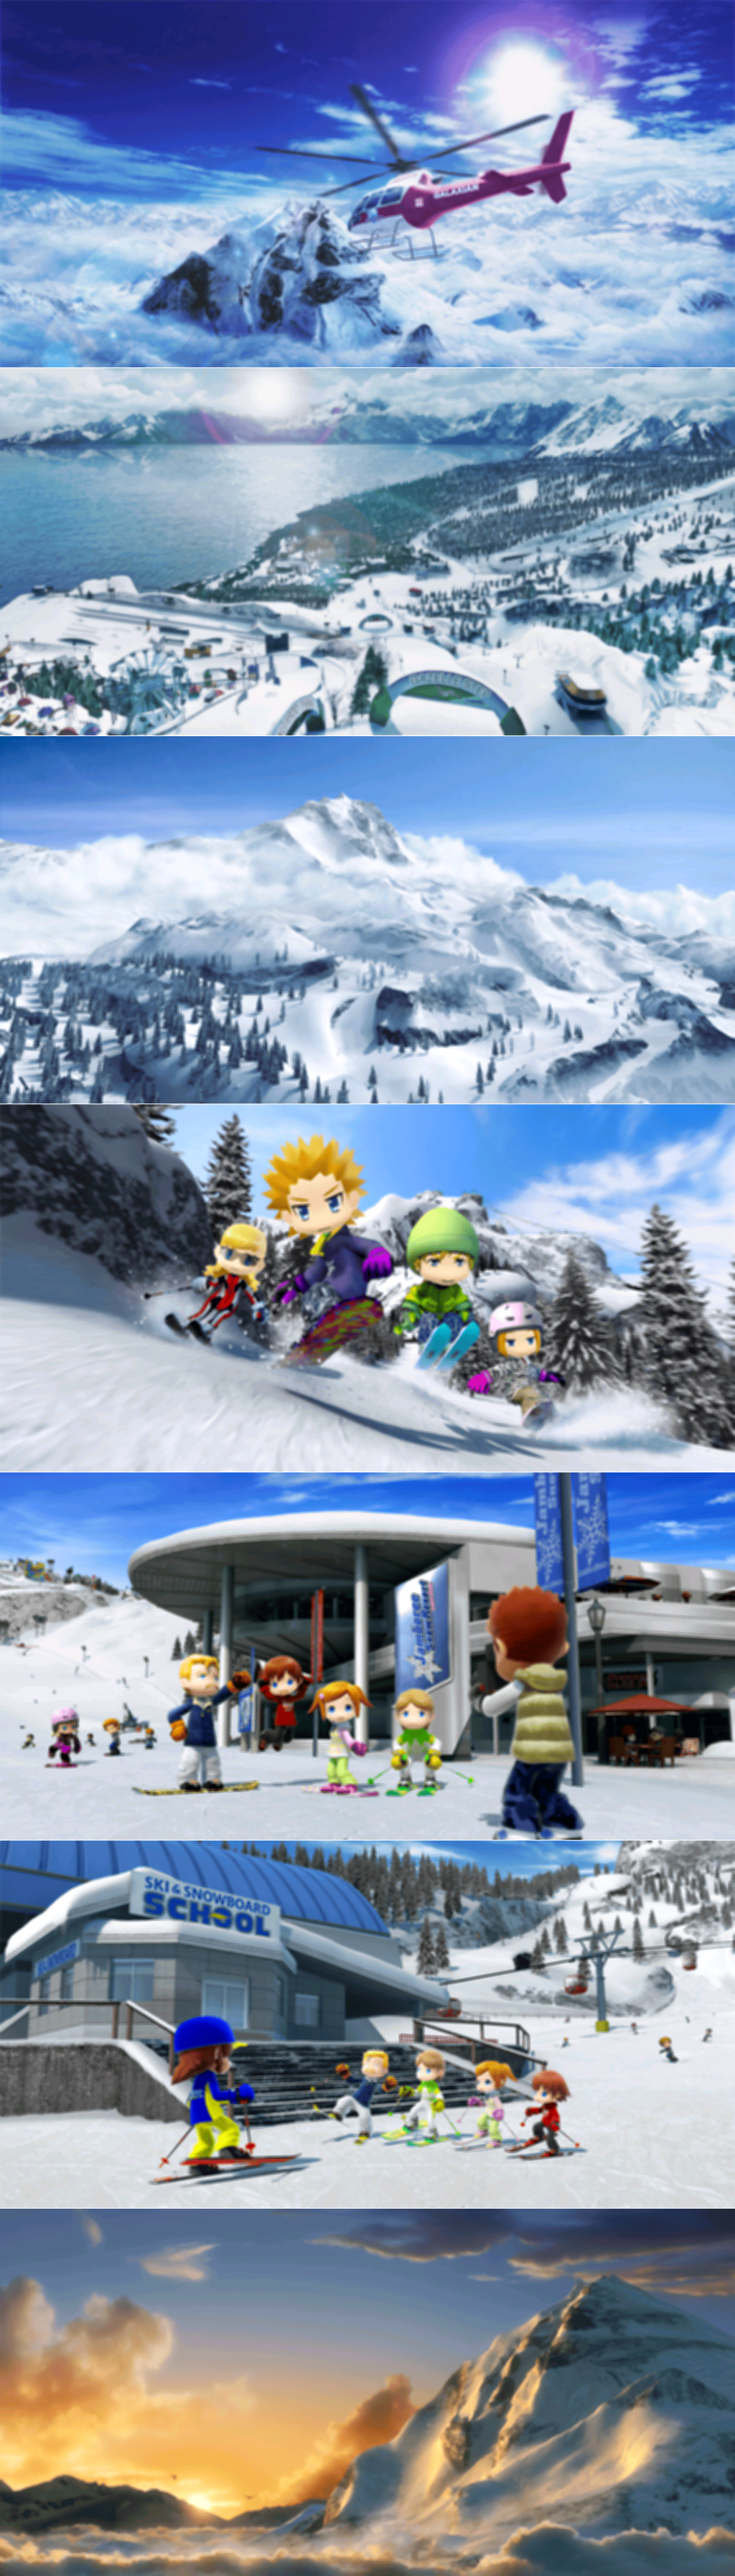 We Ski & Snowboard - Backgrounds